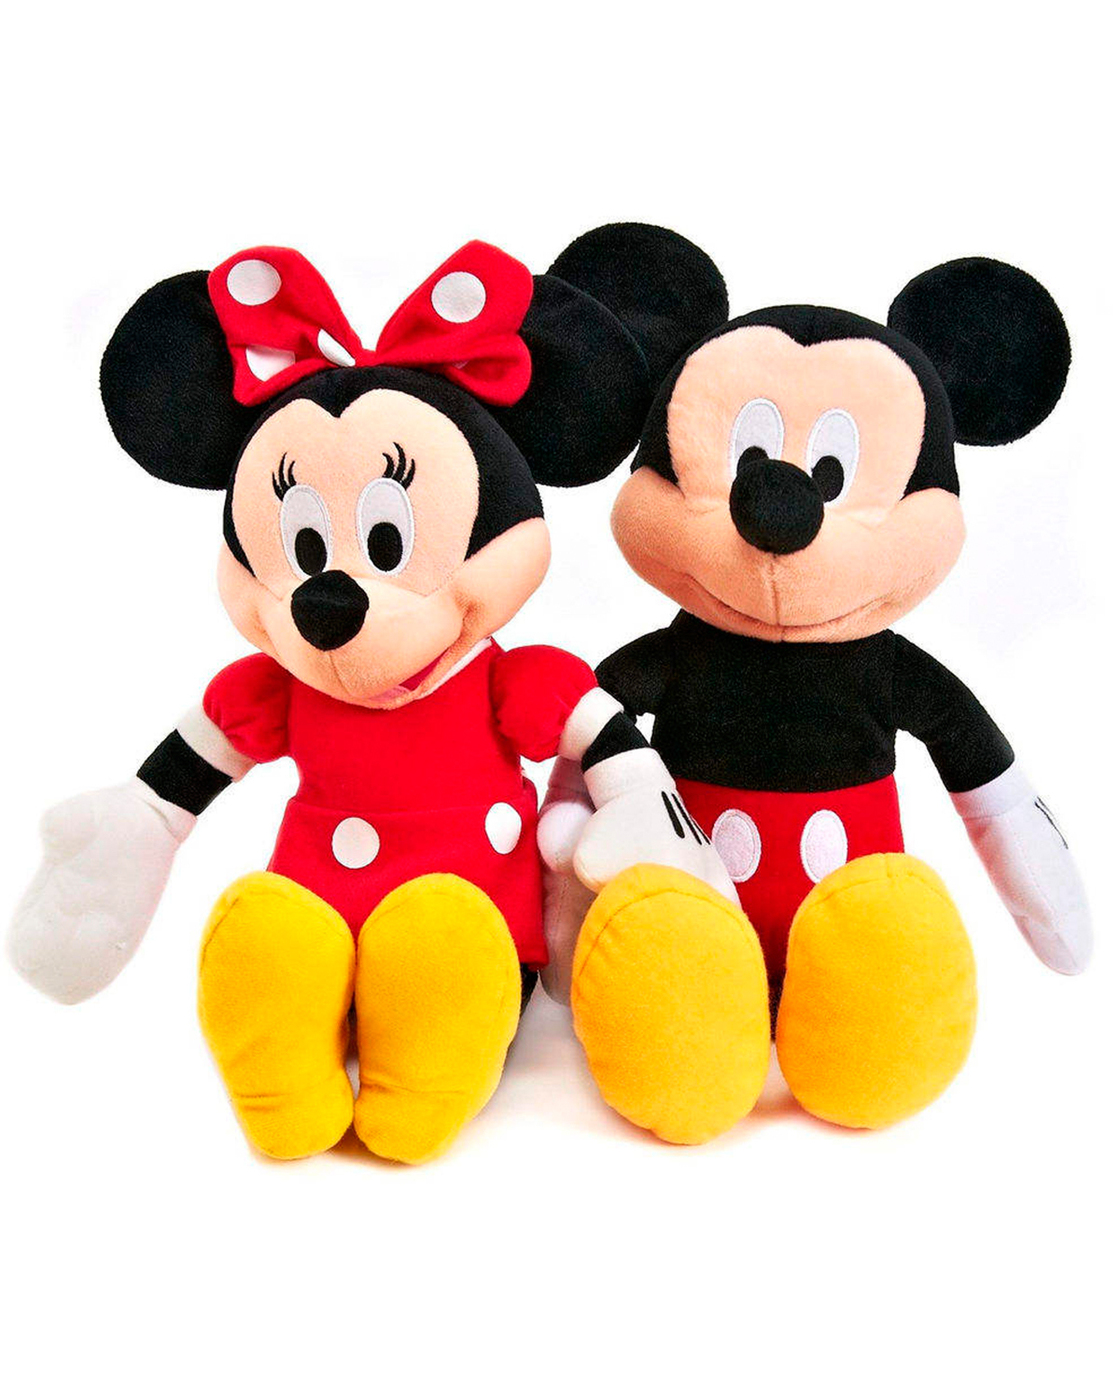 Мягкие игрушки Микки и Минни Маус Mickey Minnie Mouse, 2 шт. 35 см мягкая игрушка la laland микки маус 70 см